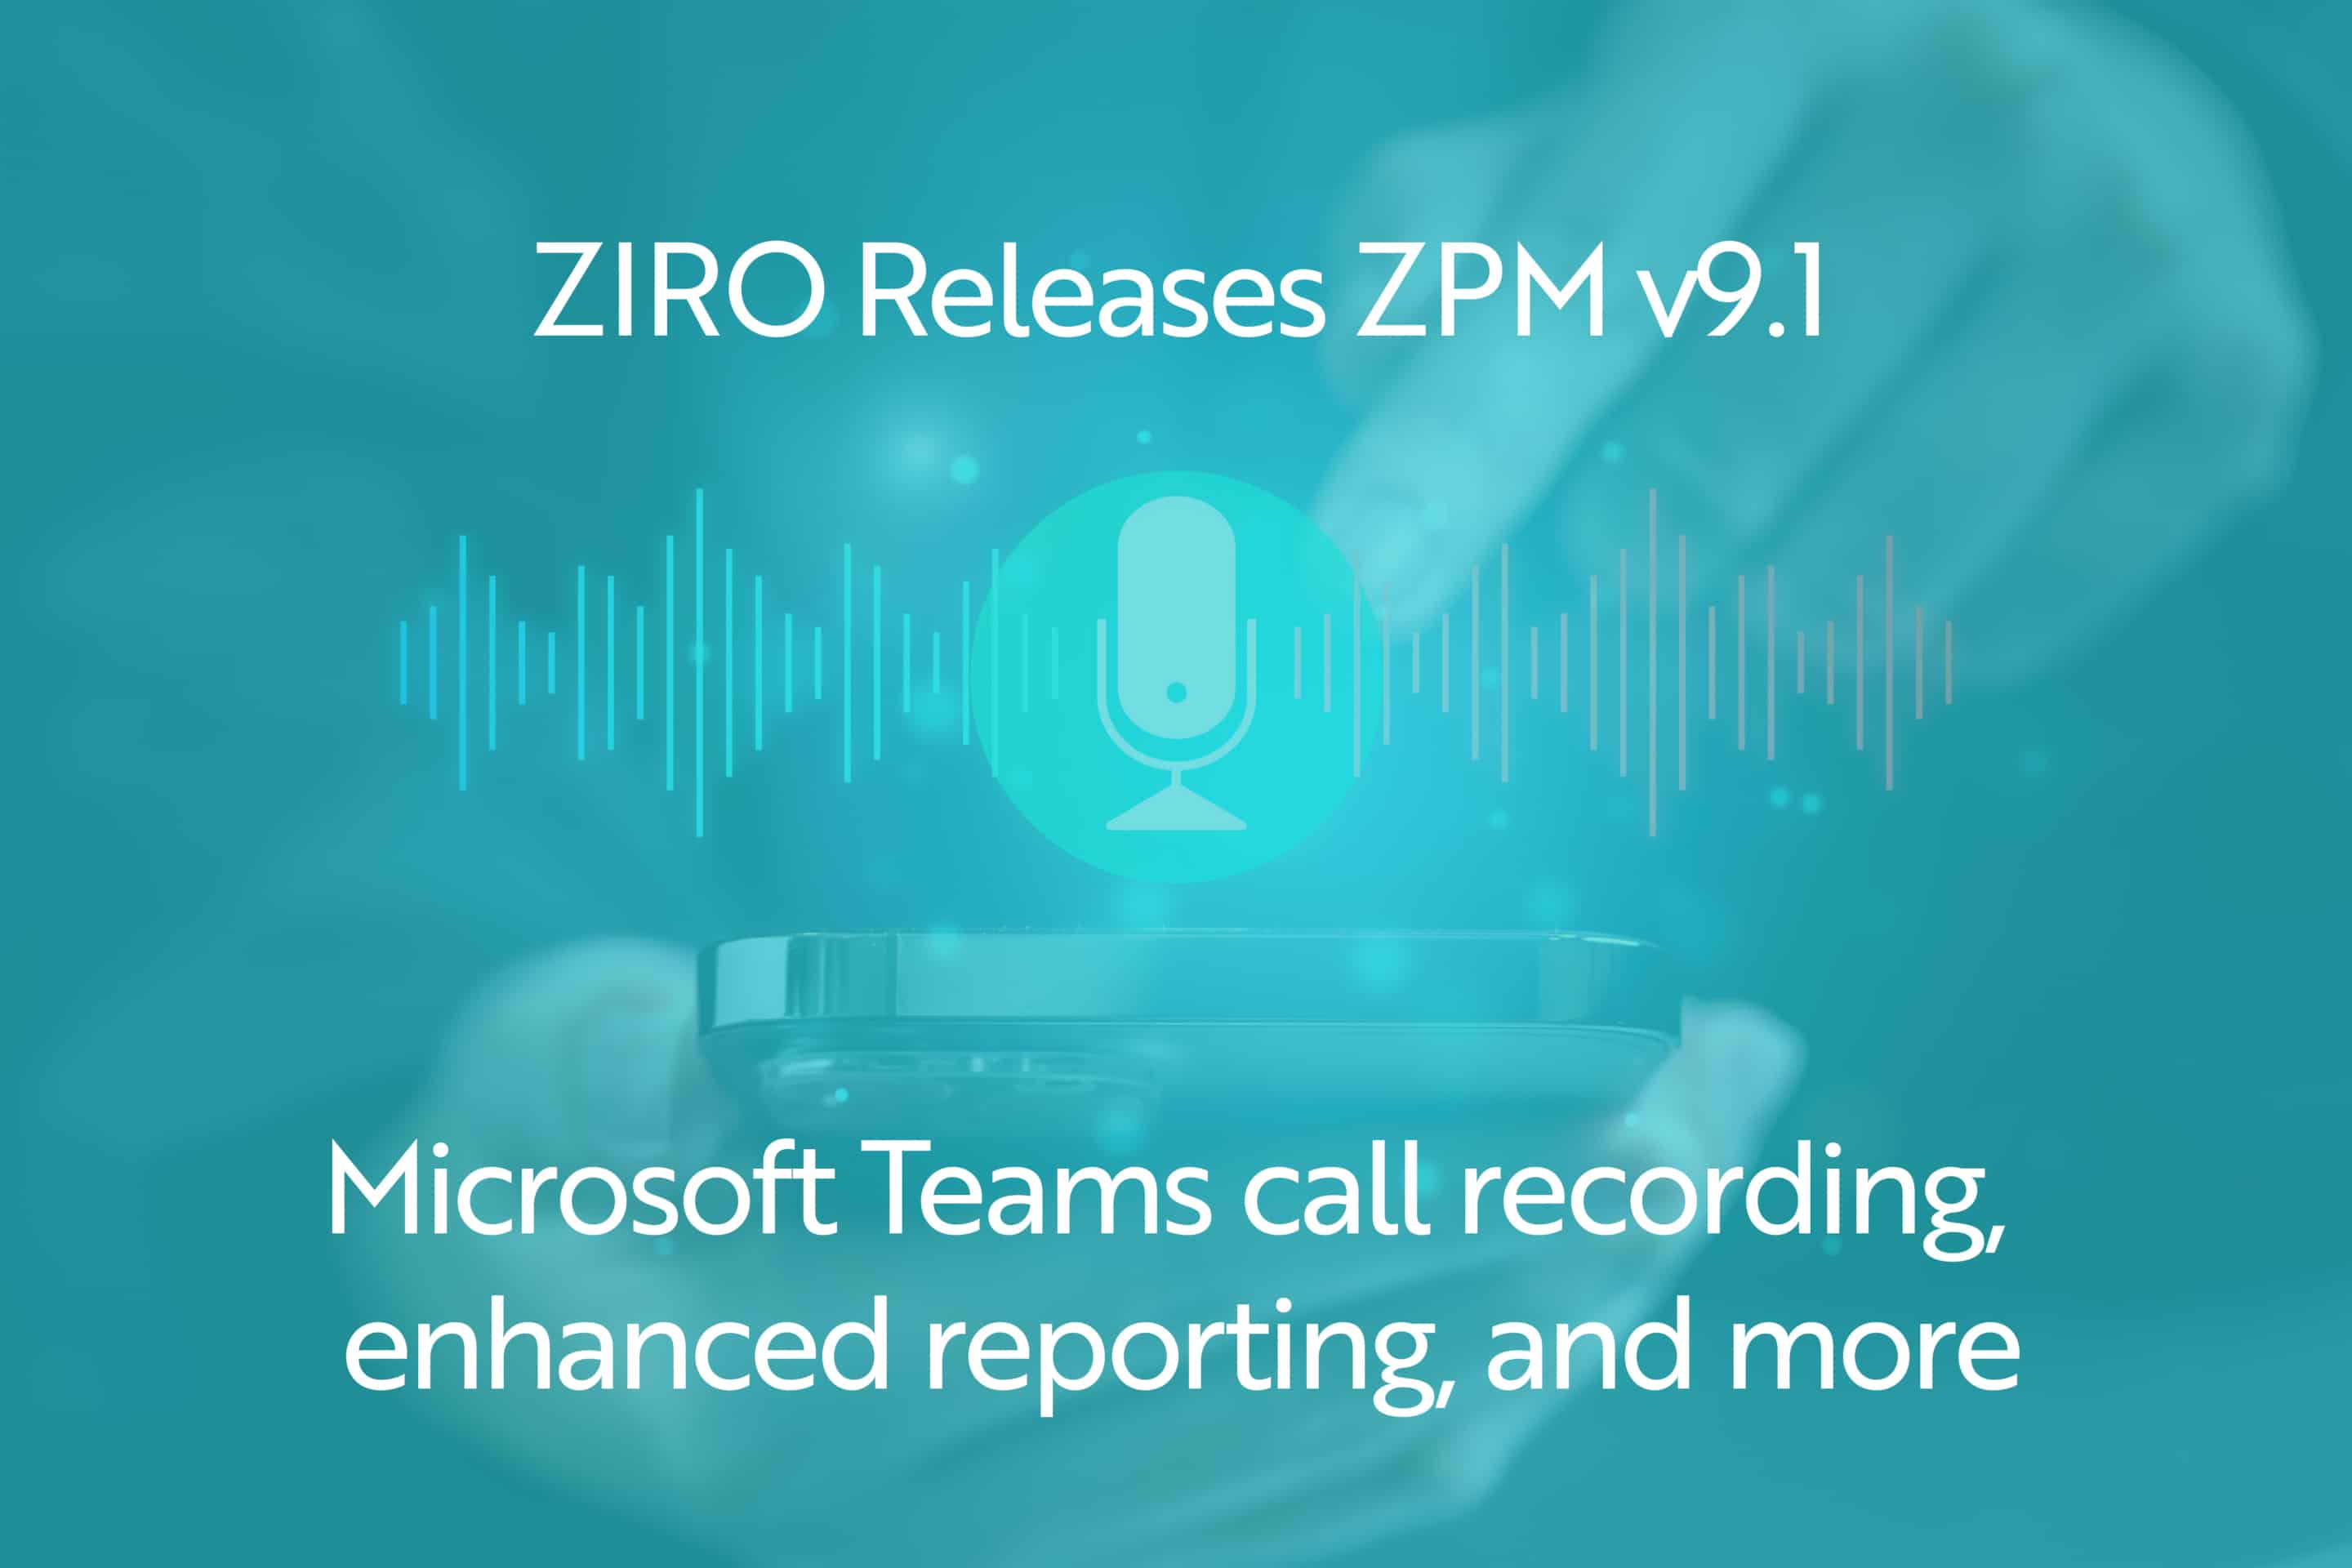 Microsoft Teams Call Recording and Enhanced Reporting